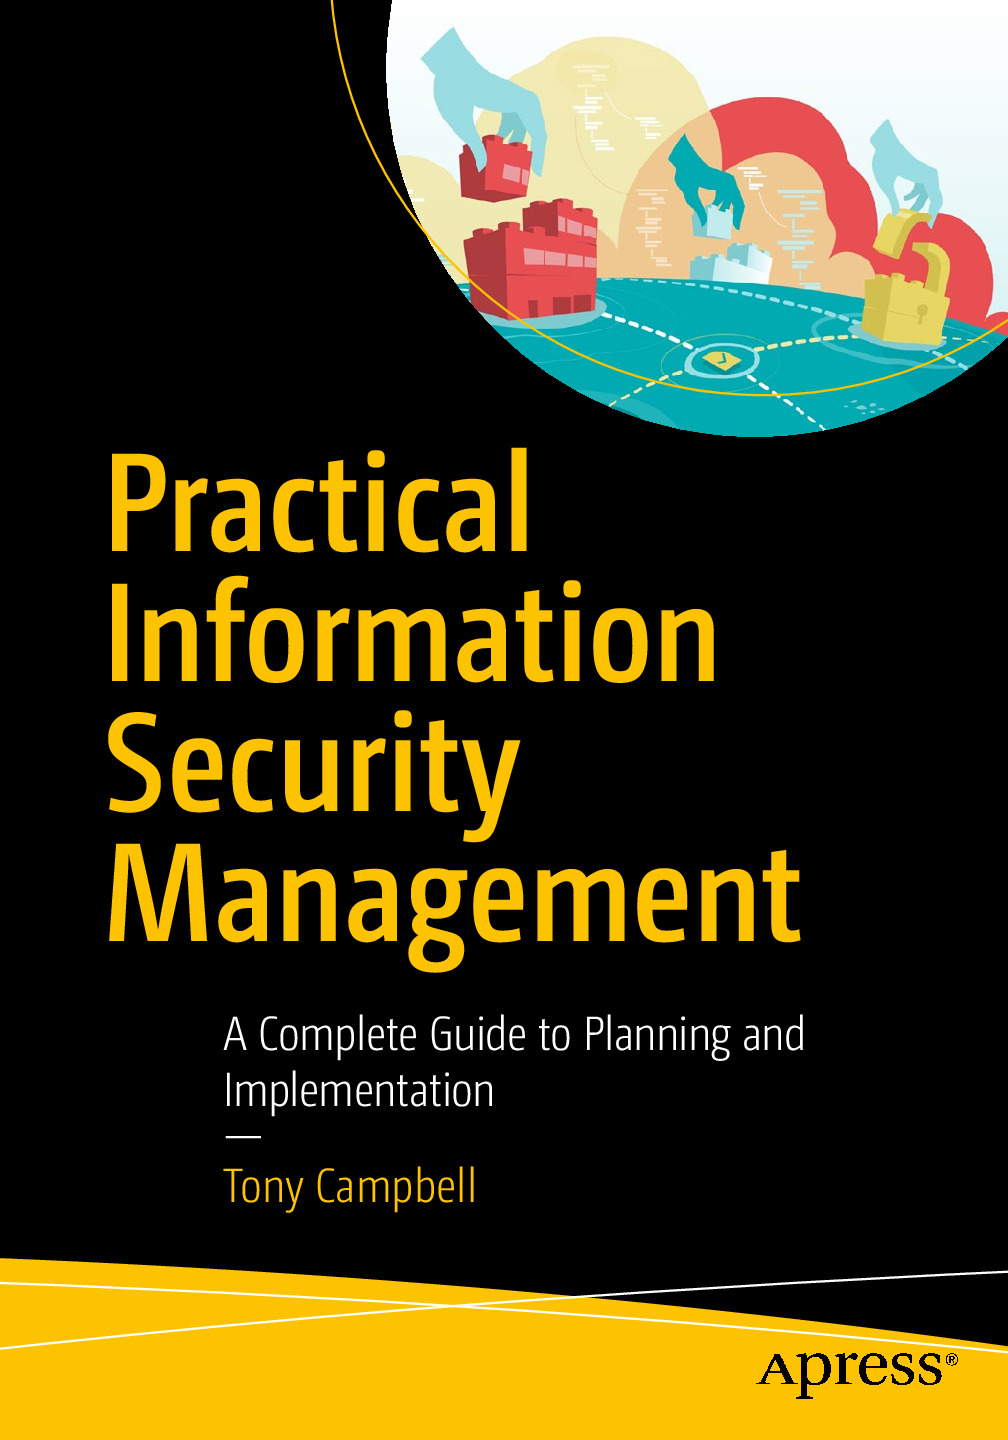 22. Practical Information Security Management 2016